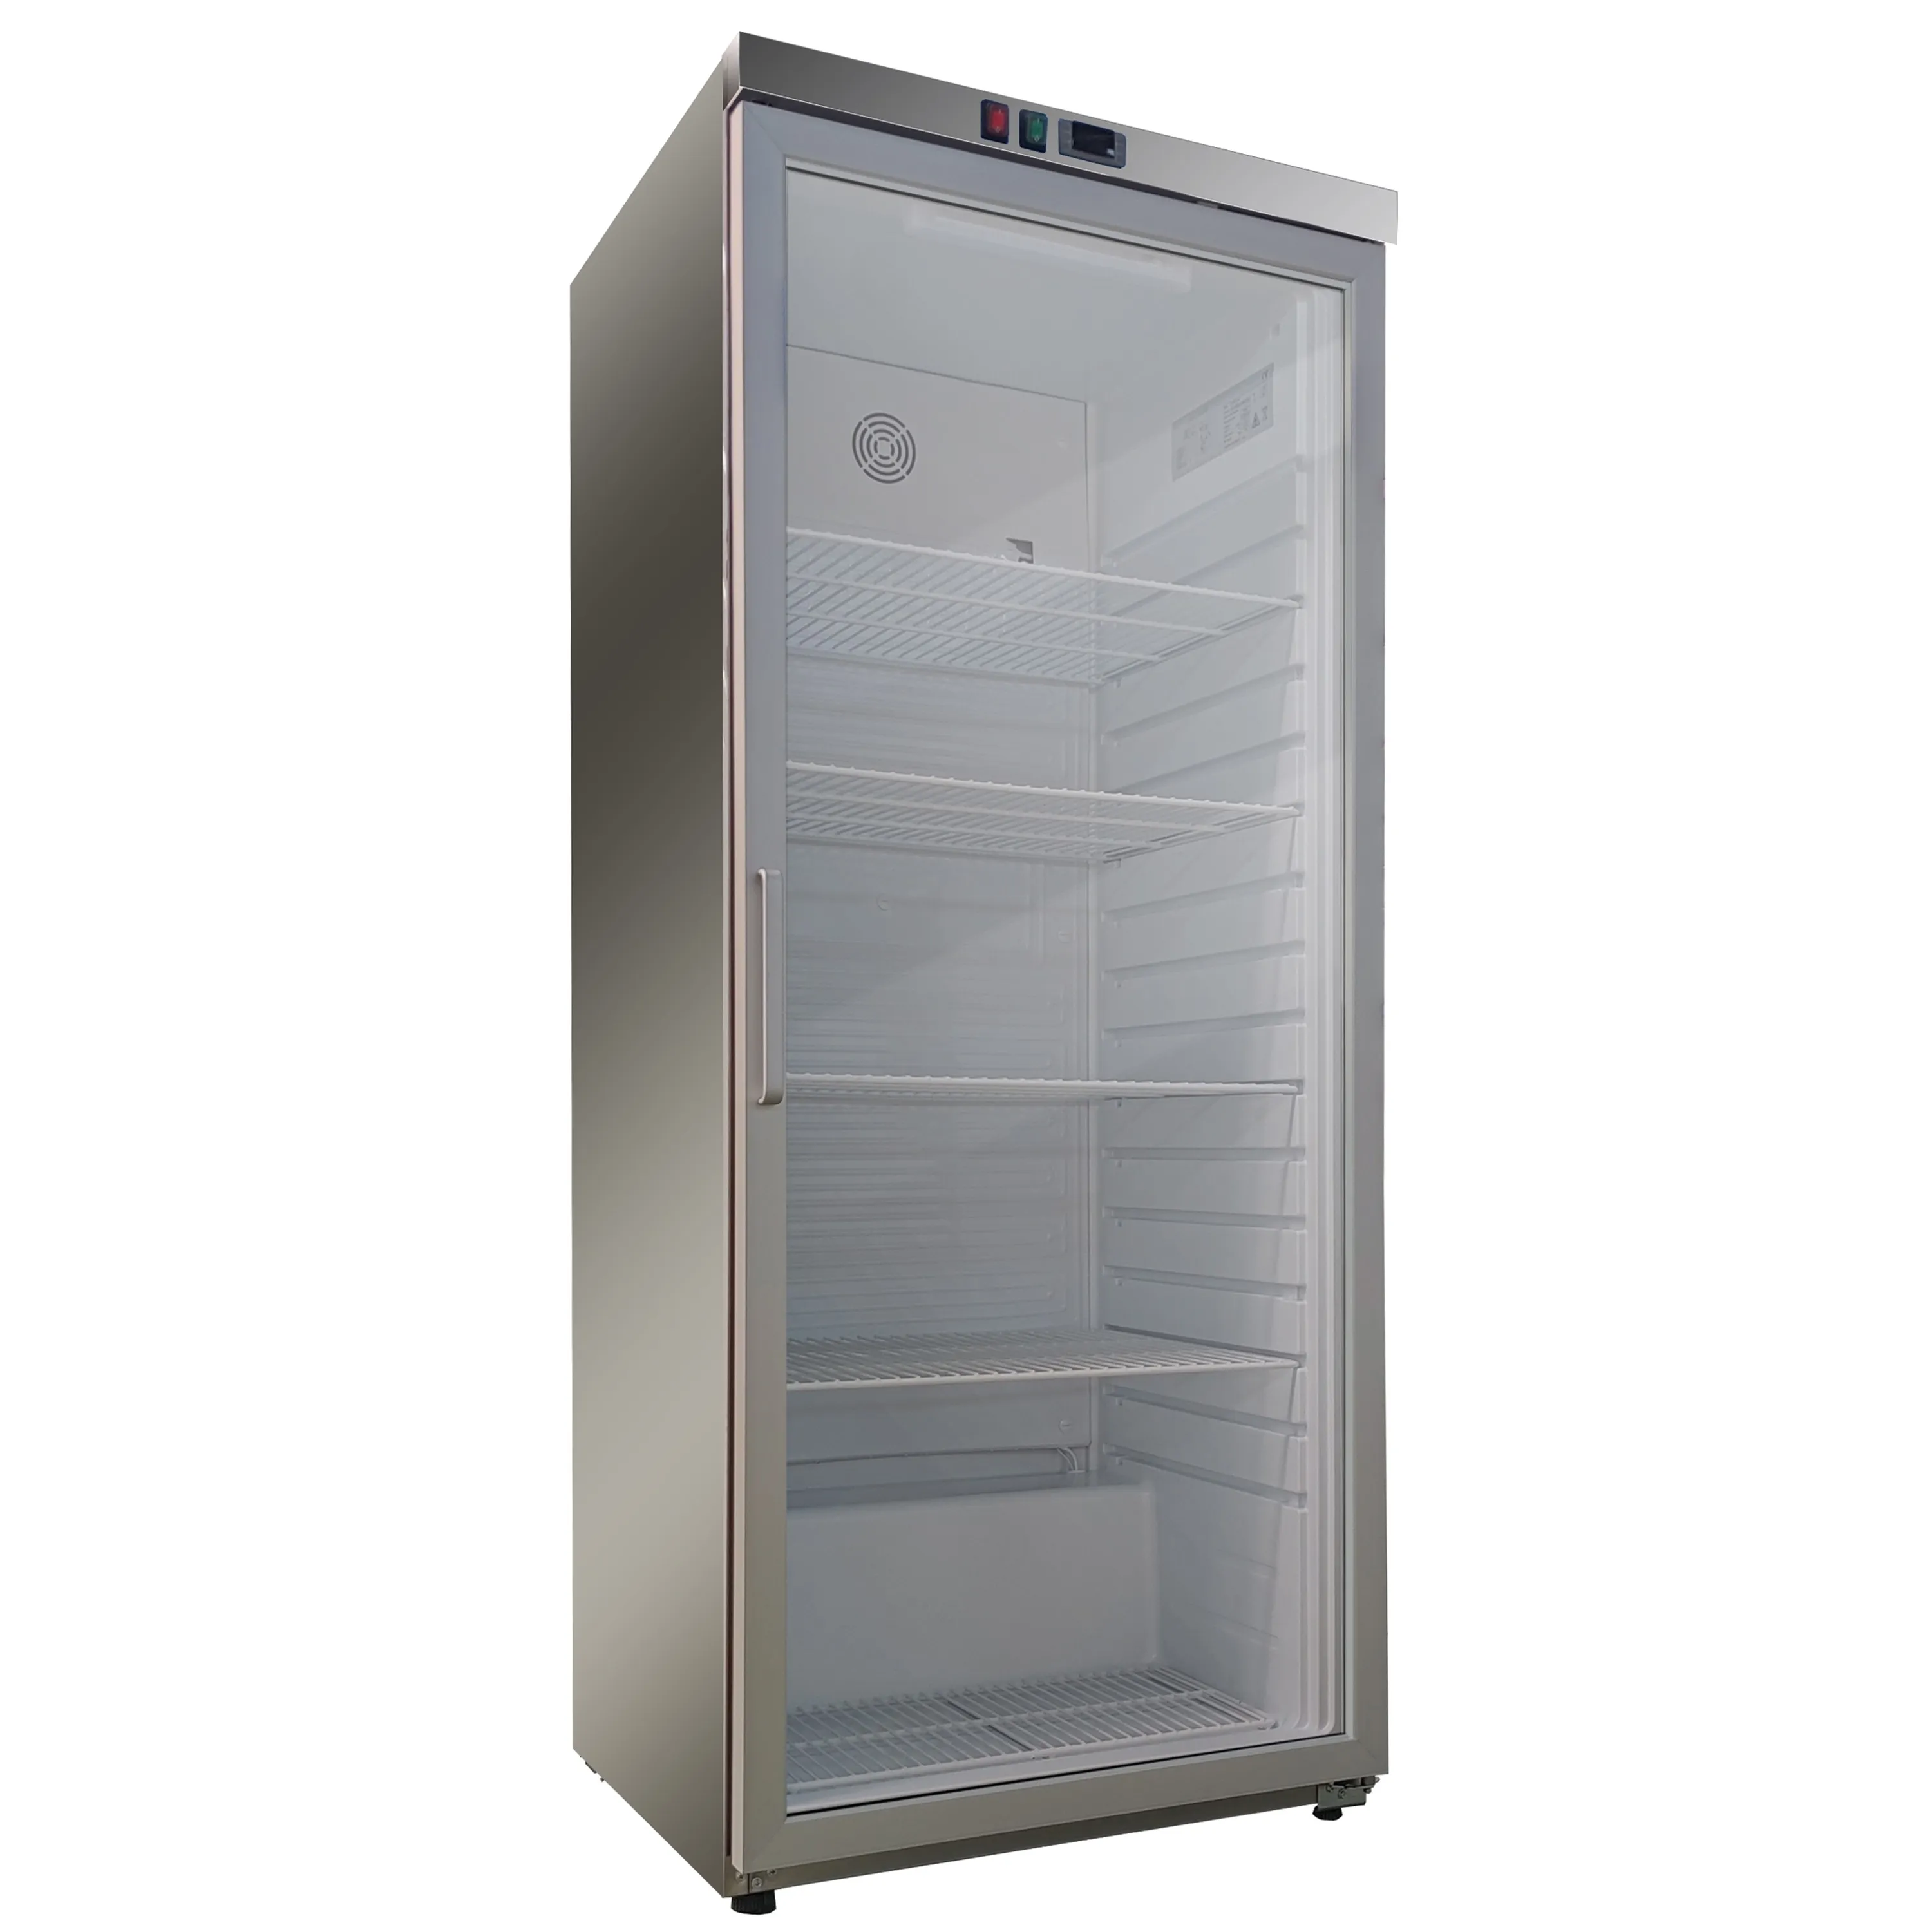 Blizzard HSG60 Single Glass Door Stainless Steel Refrigerator